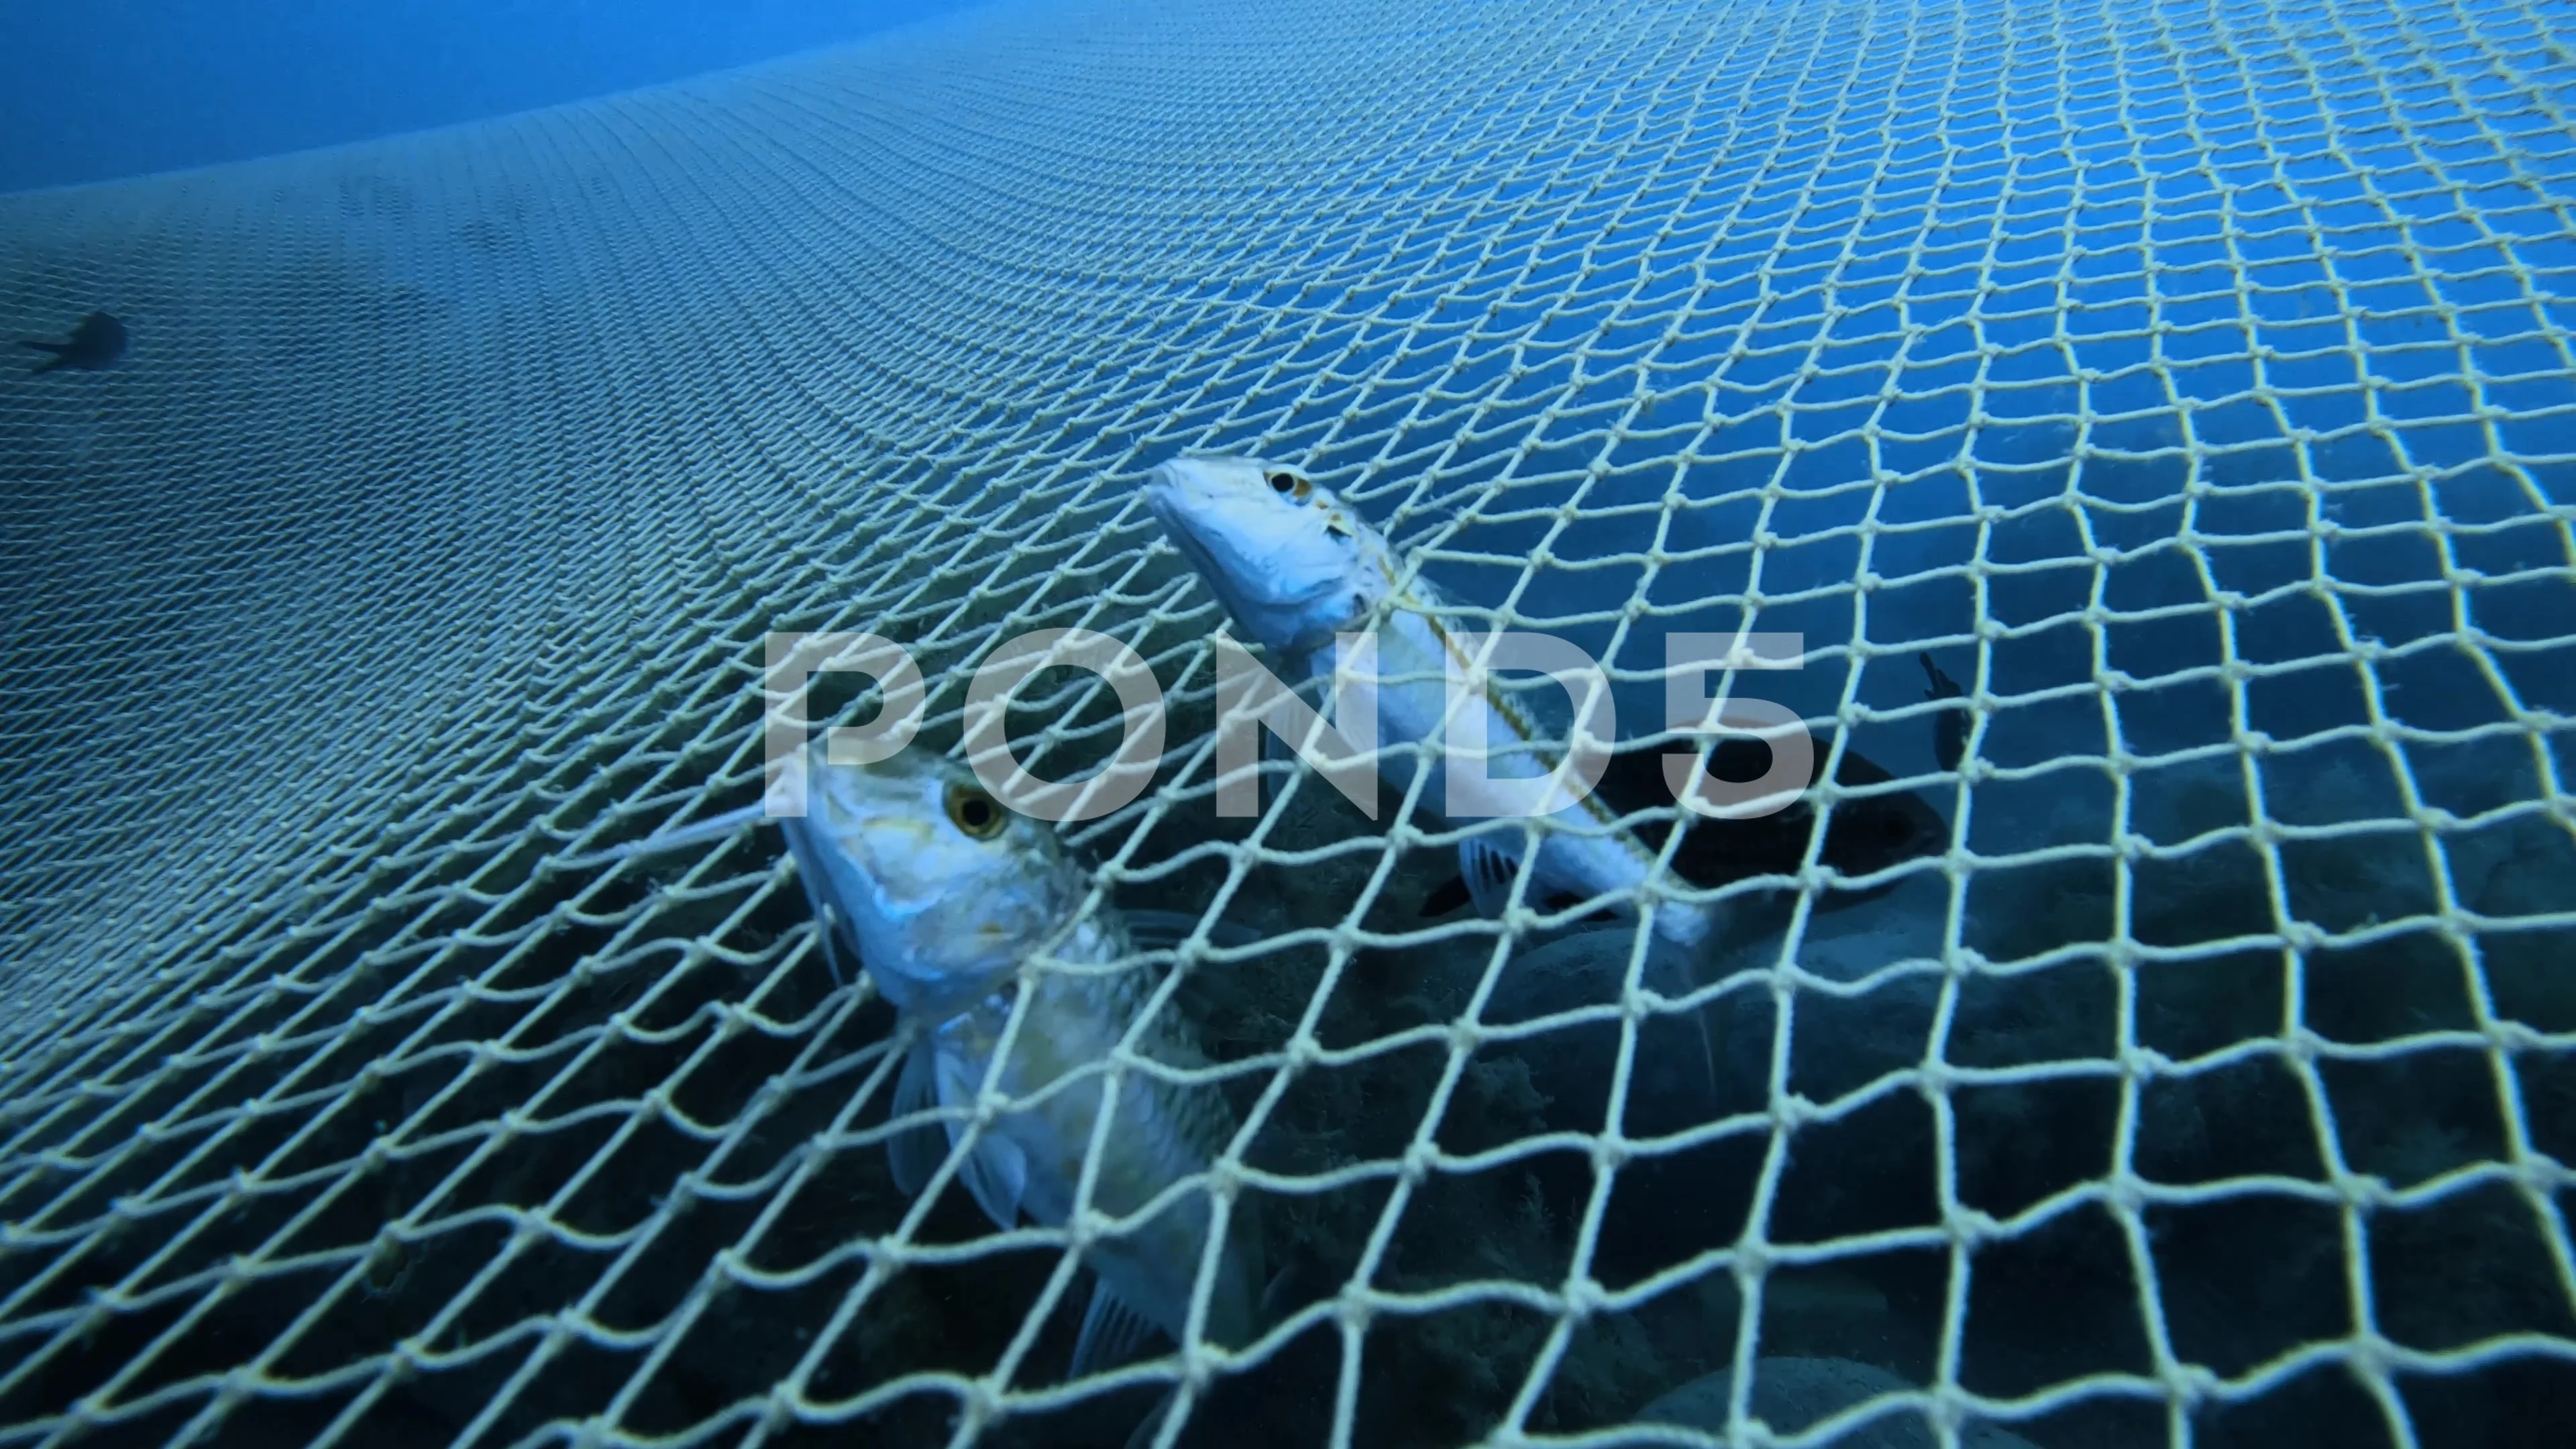 https://images.pond5.com/fishes-caught-fishing-net-underwater-footage-248126644_prevstill.jpeg